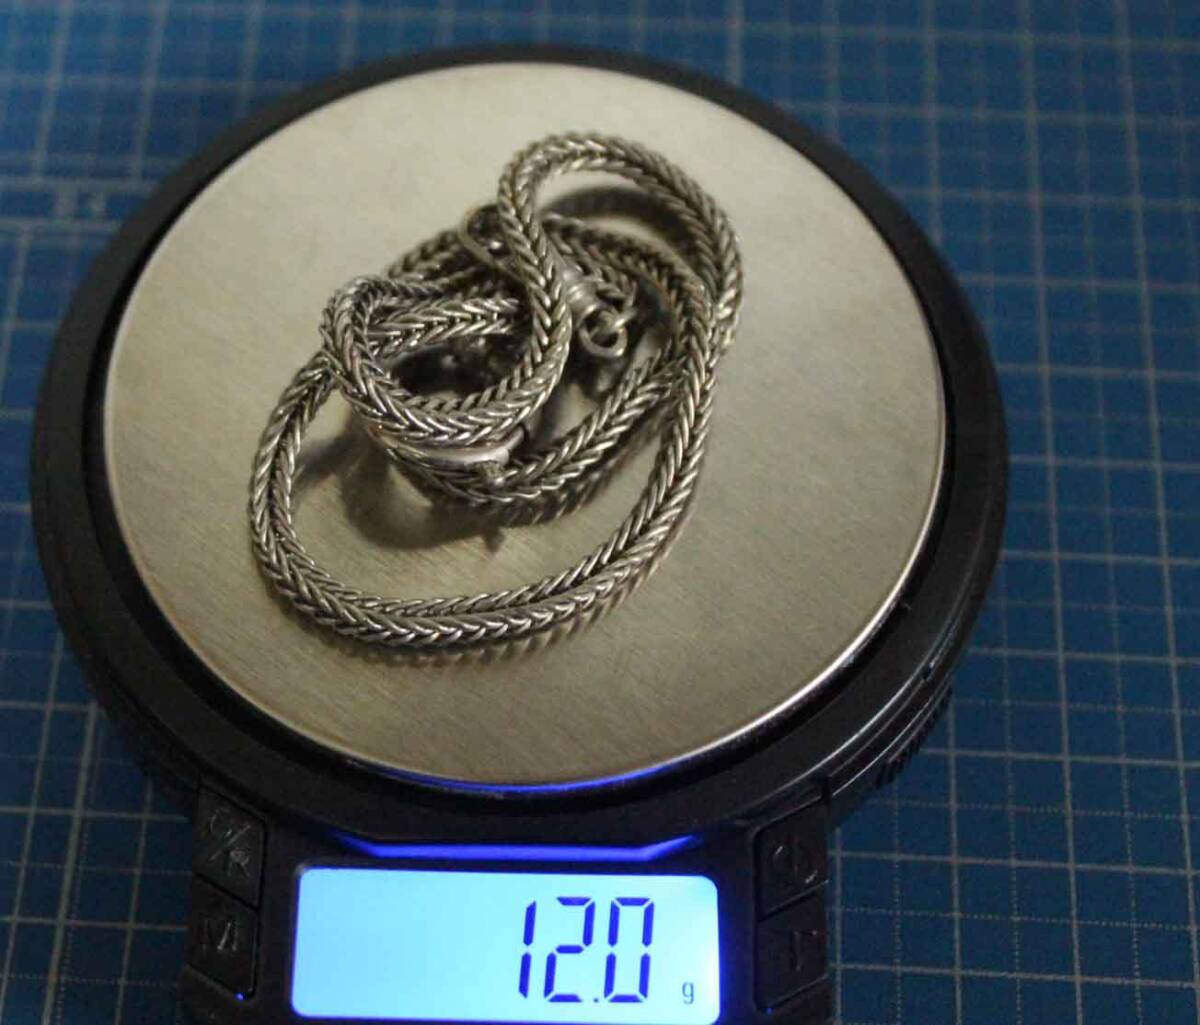 tb64]鎖 銀色 金属製 懐中時計 時計用 クサリ silver chain 12g 